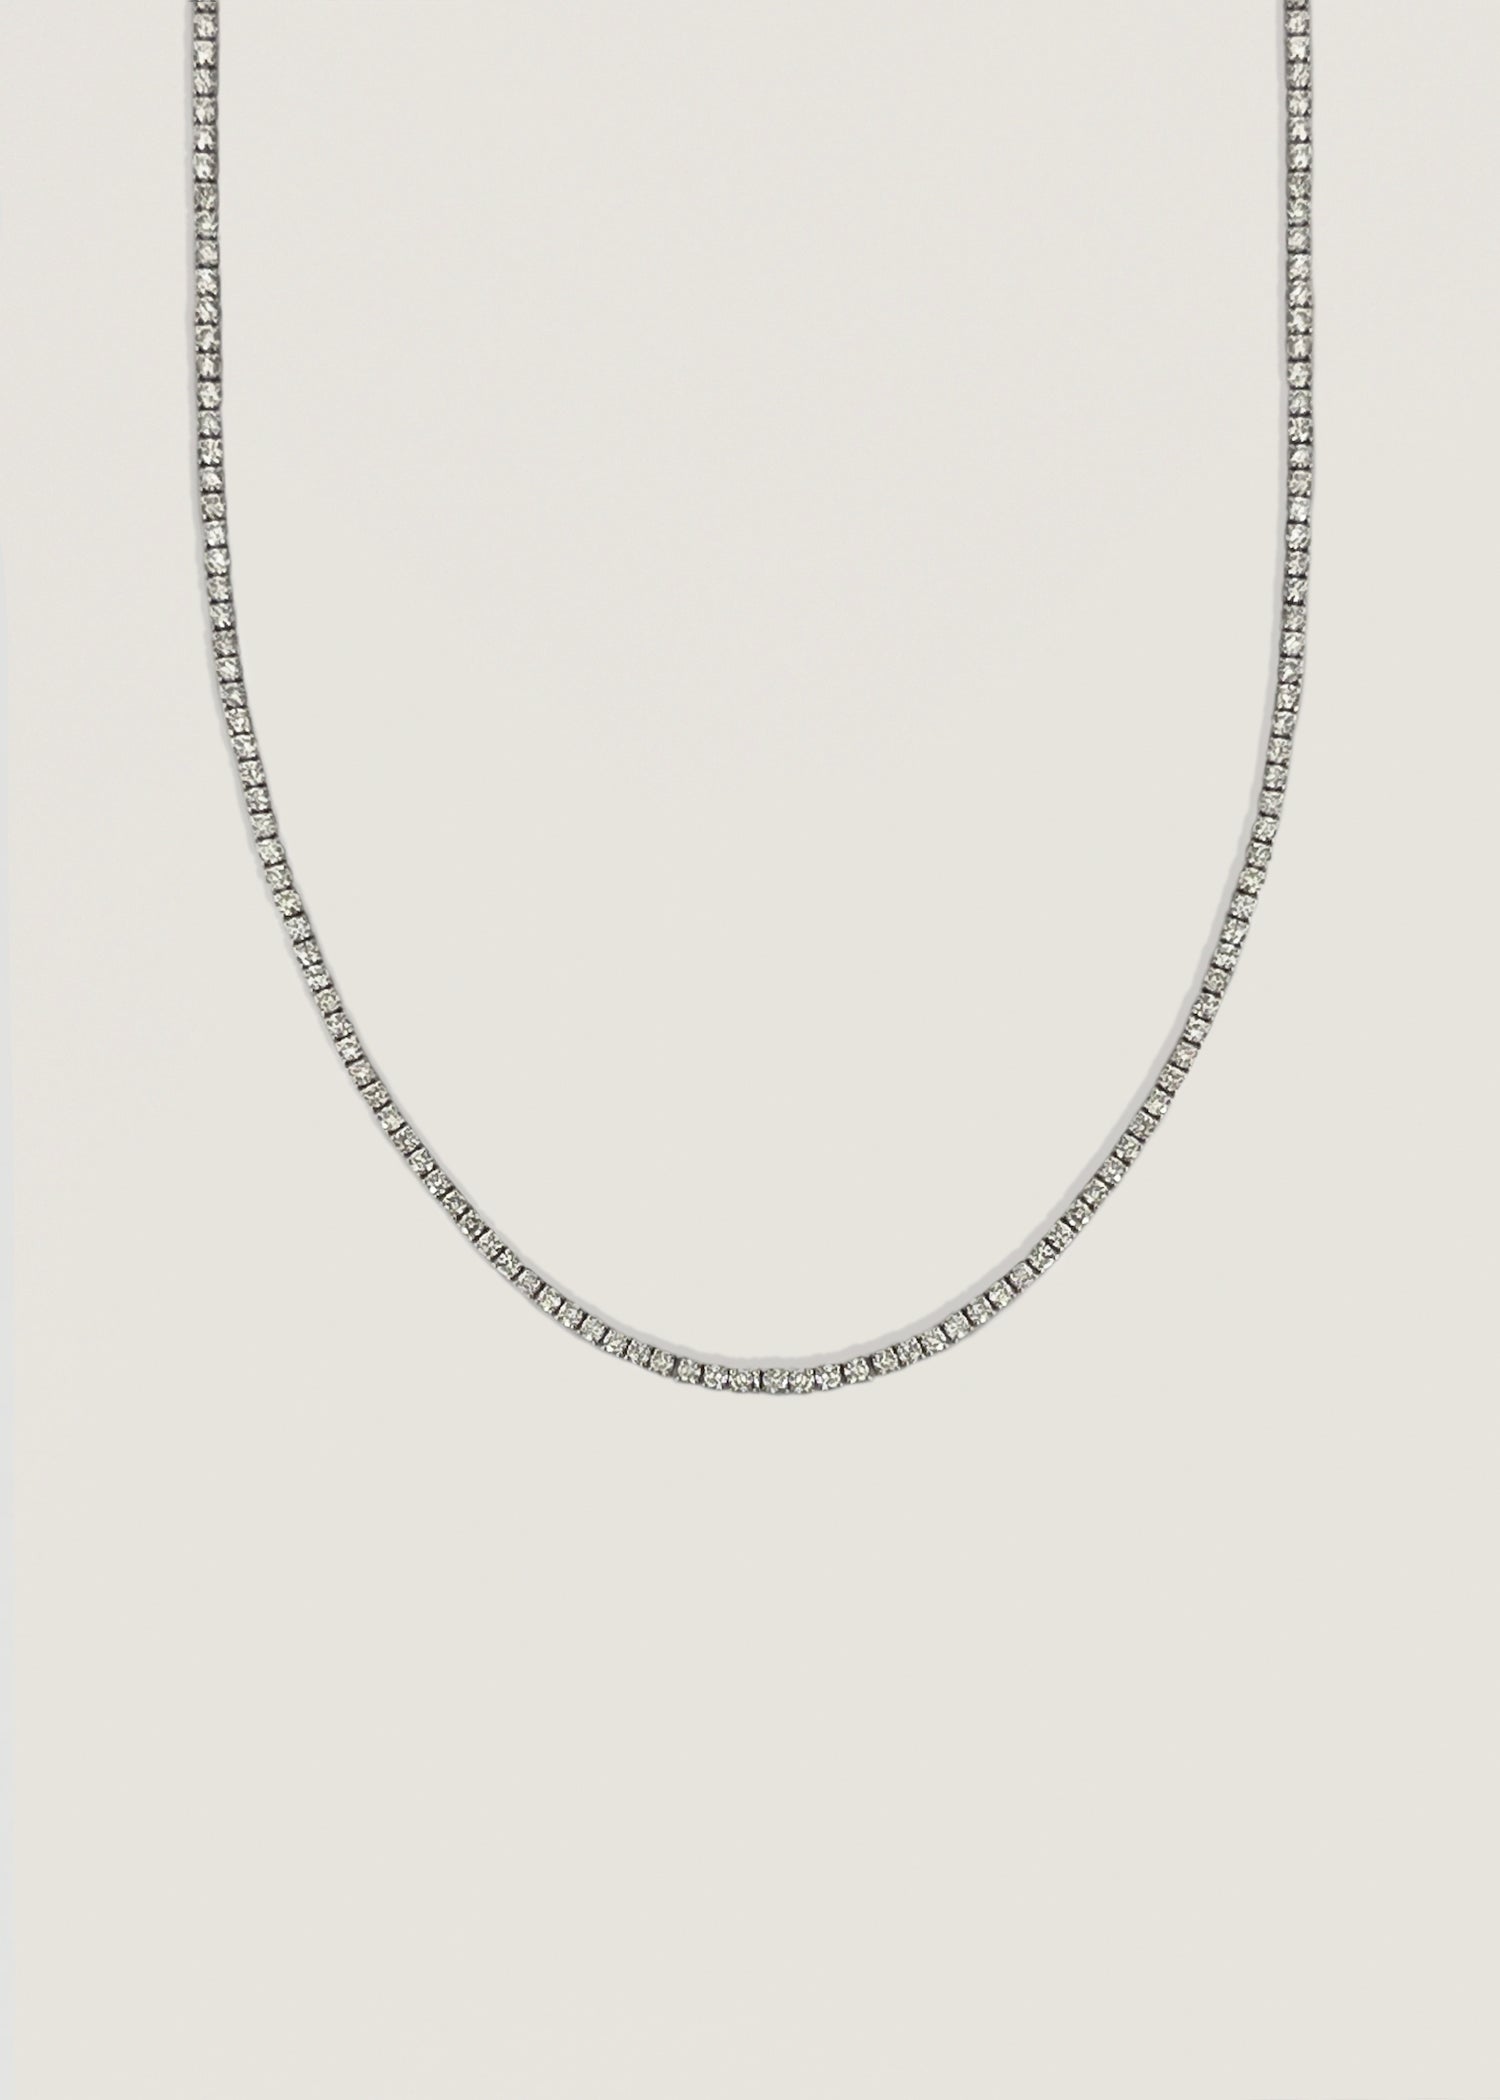 alt="Petite Diana Diamond Tennis Necklace white gold"